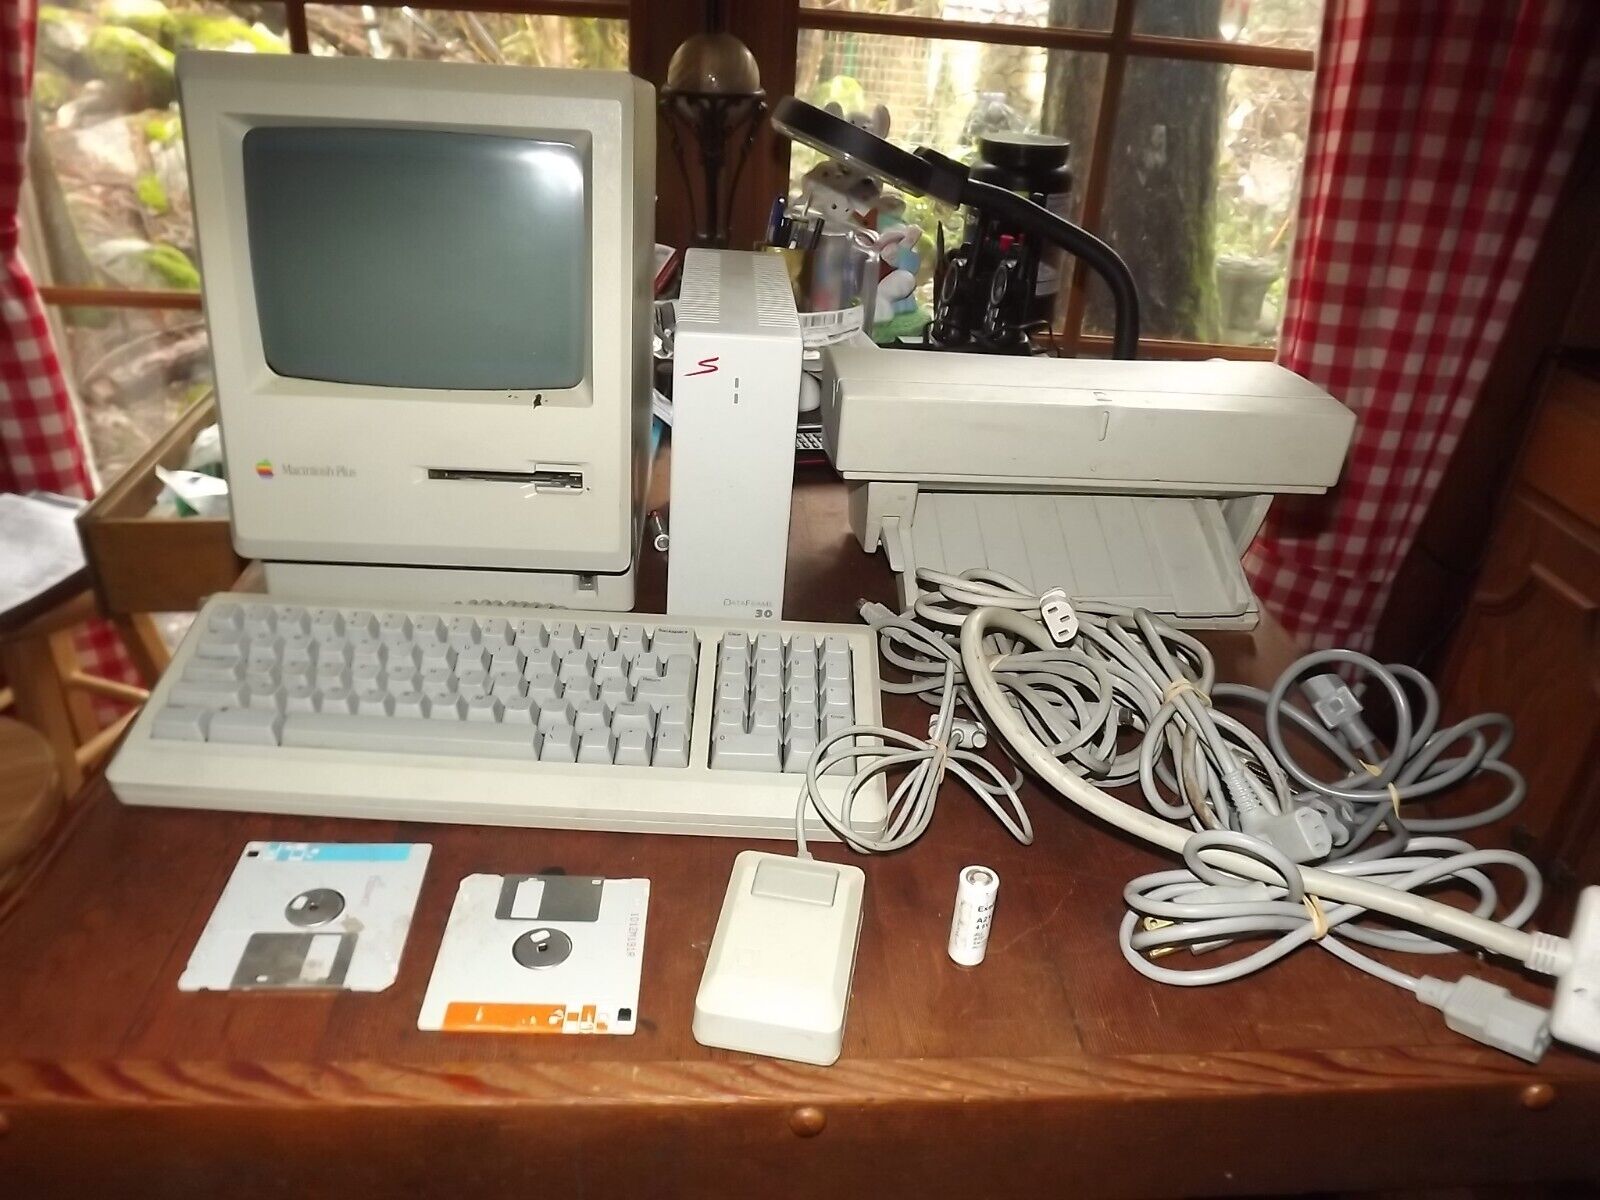 1986 Apple Macintosh Plus Computer with data frame 30, printer, keyboard, mouse.